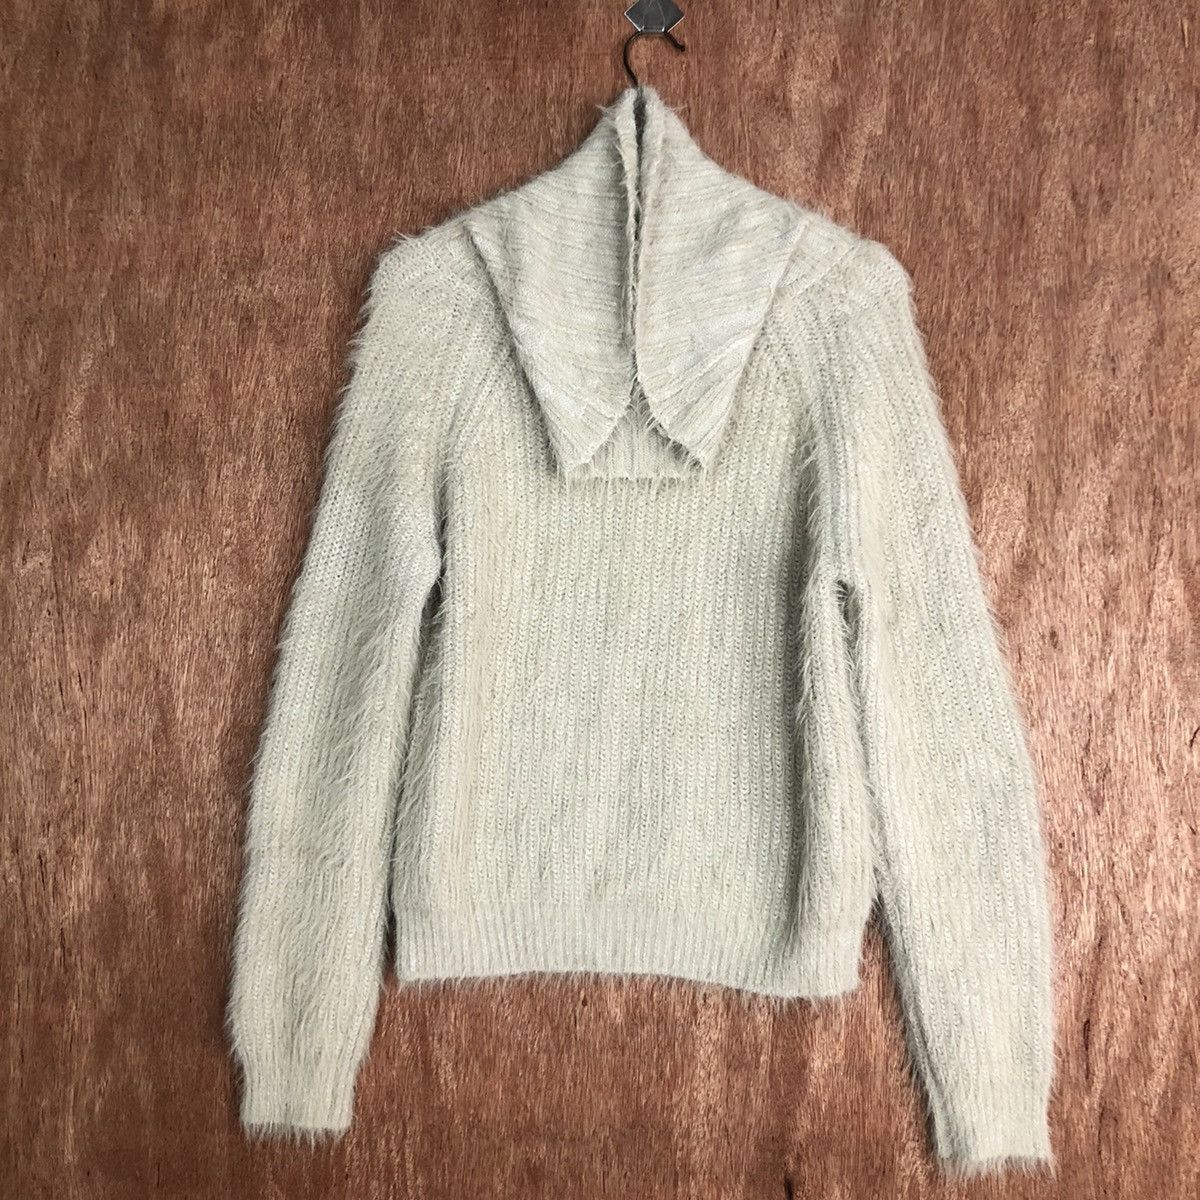 Homespun Knitwear Turtle Neck Mohair Knit Sweater Size US S / EU 44-46 / 1 - 3 Thumbnail